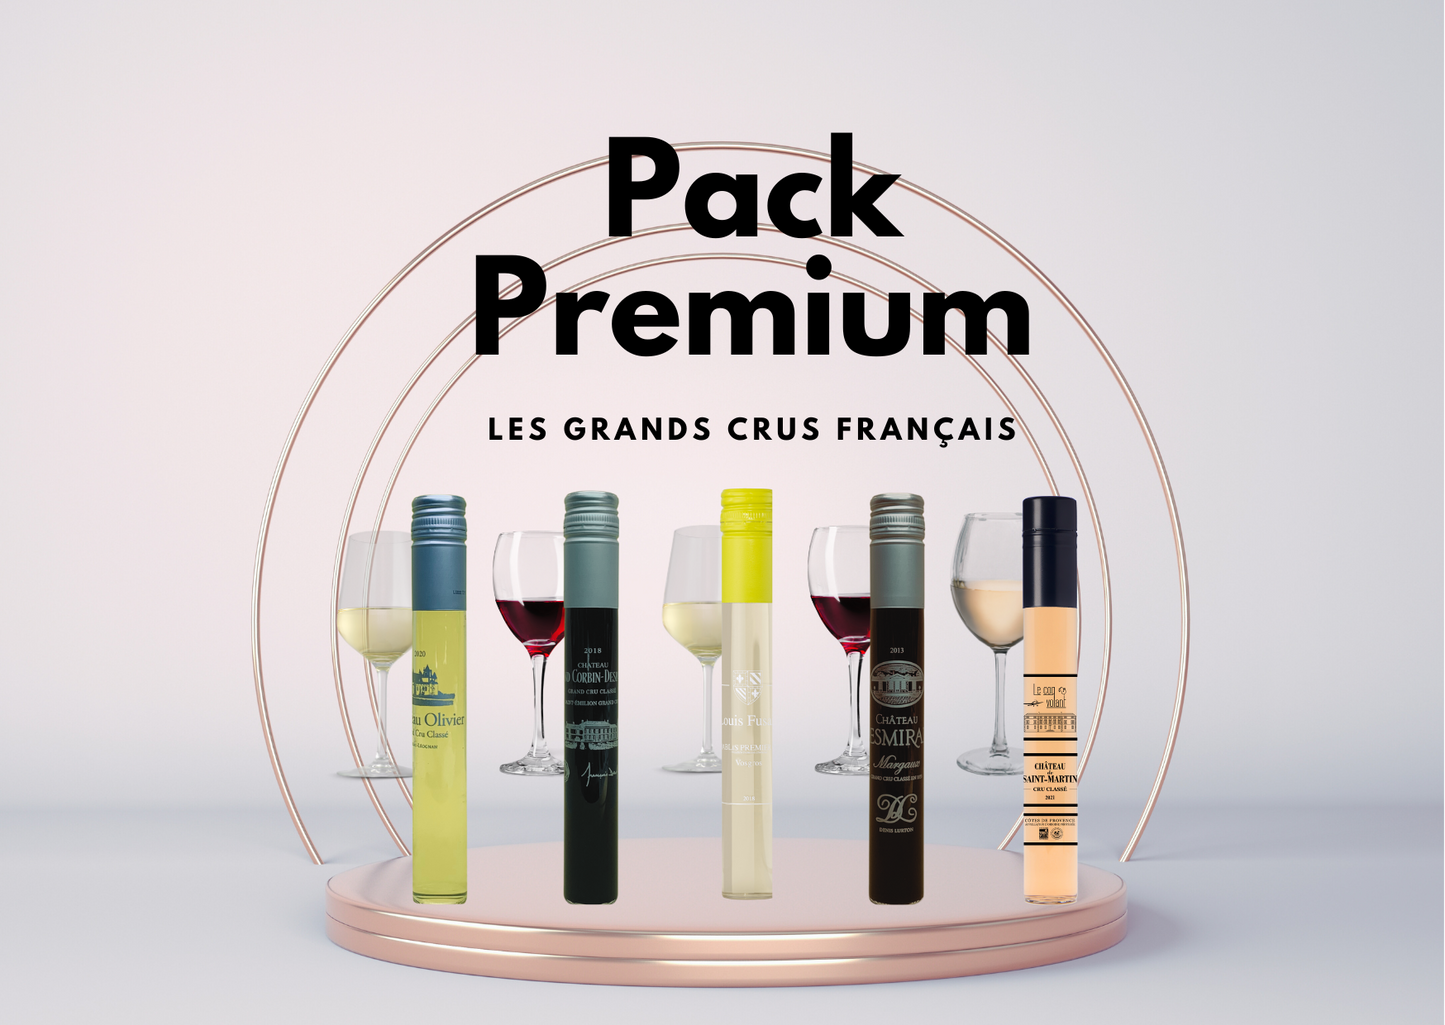 Pack Premium : "Les grands crus français" (50 tubes)